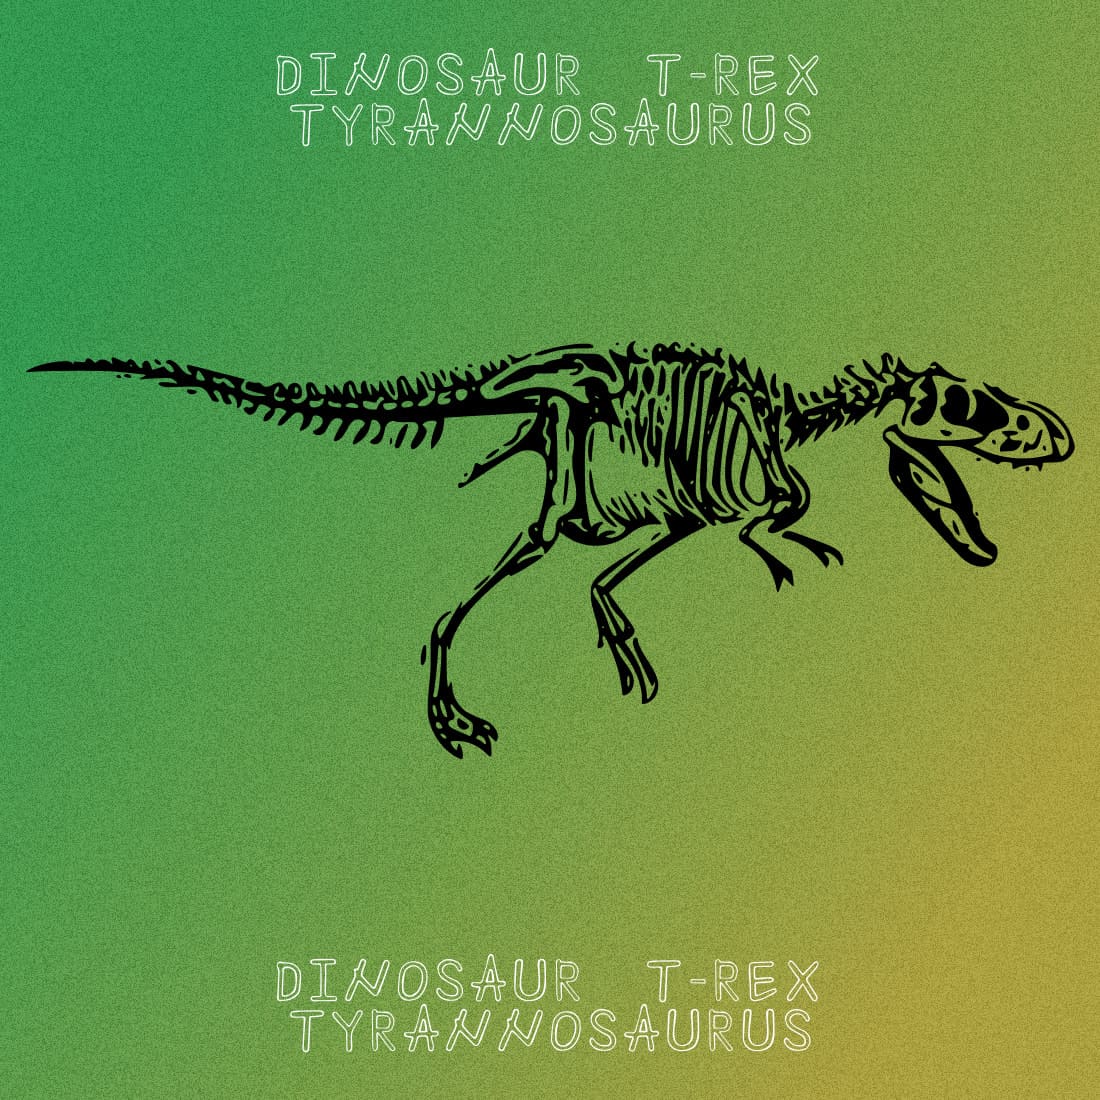 Dinosaur T-rex Tyrannosaurus - Green Colorful Image.